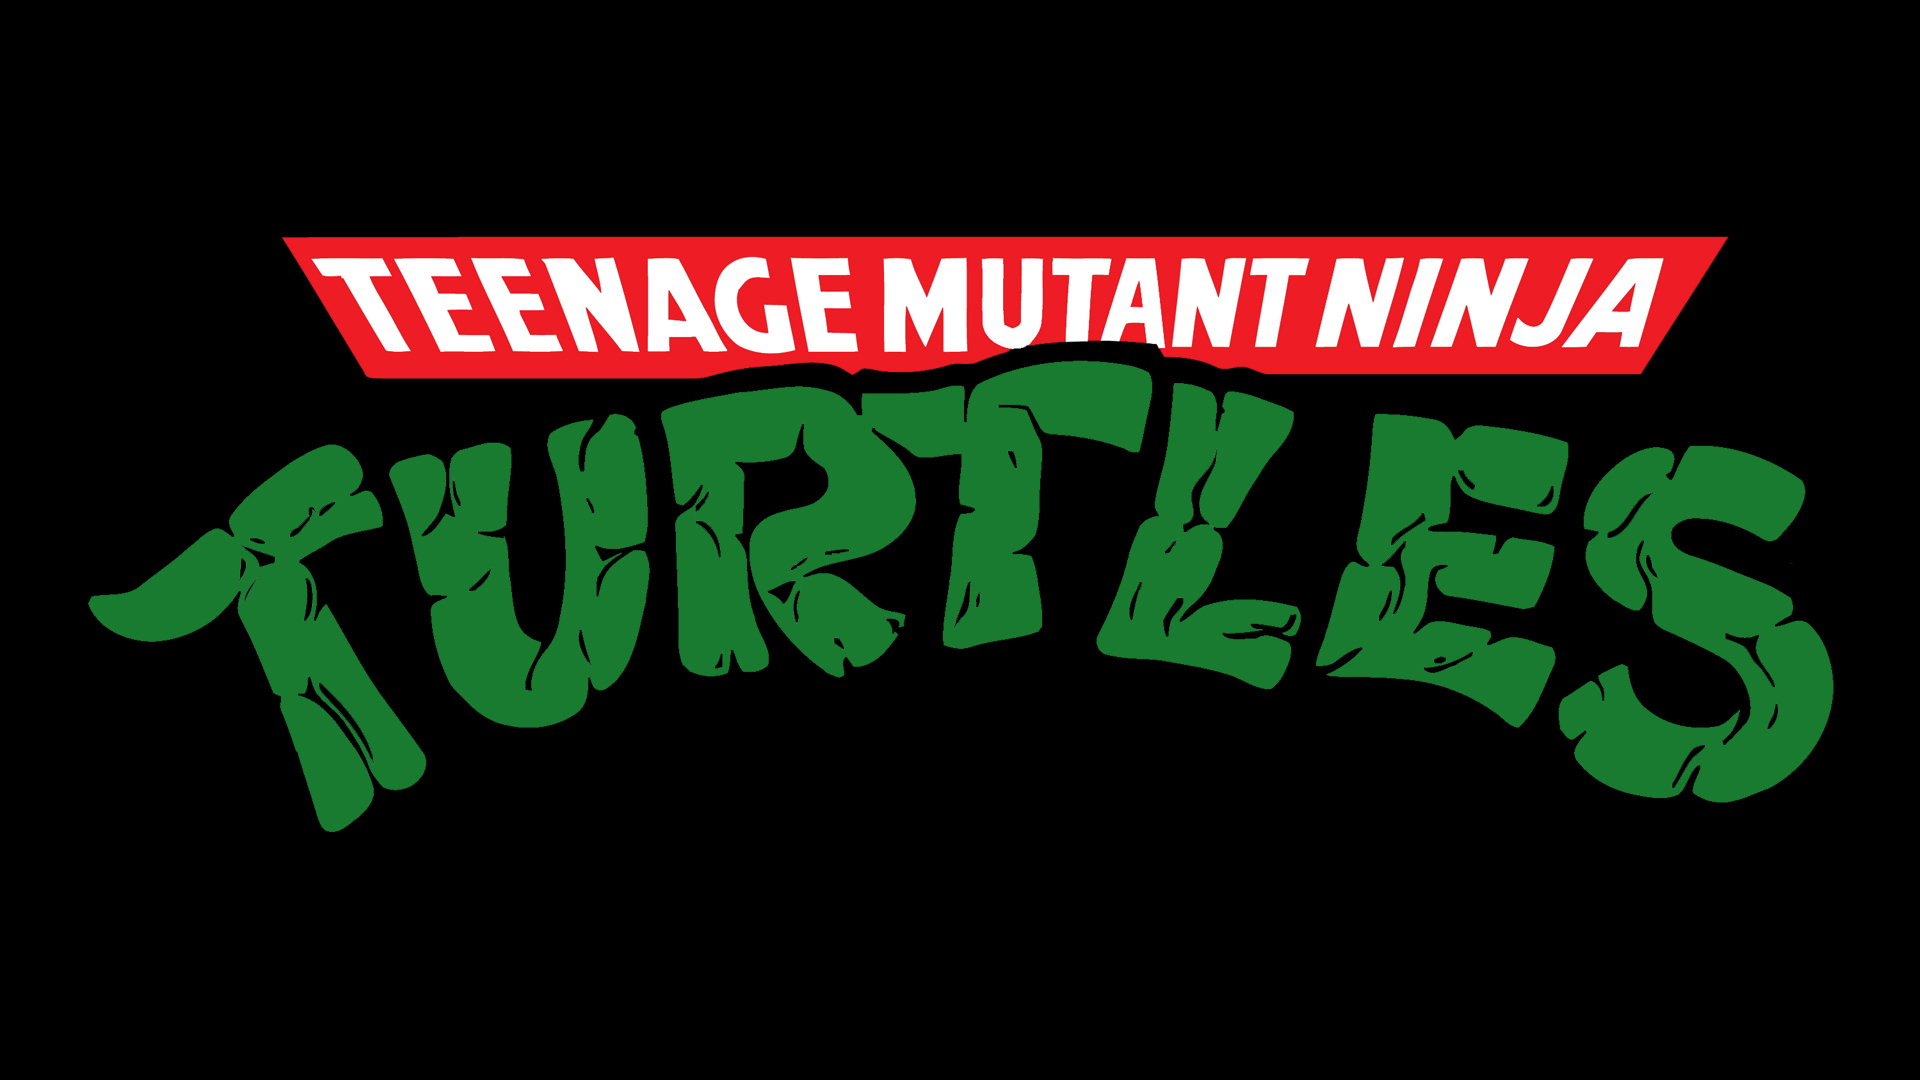 Teenage Mutant Ninja Turtles HD Wallpapers